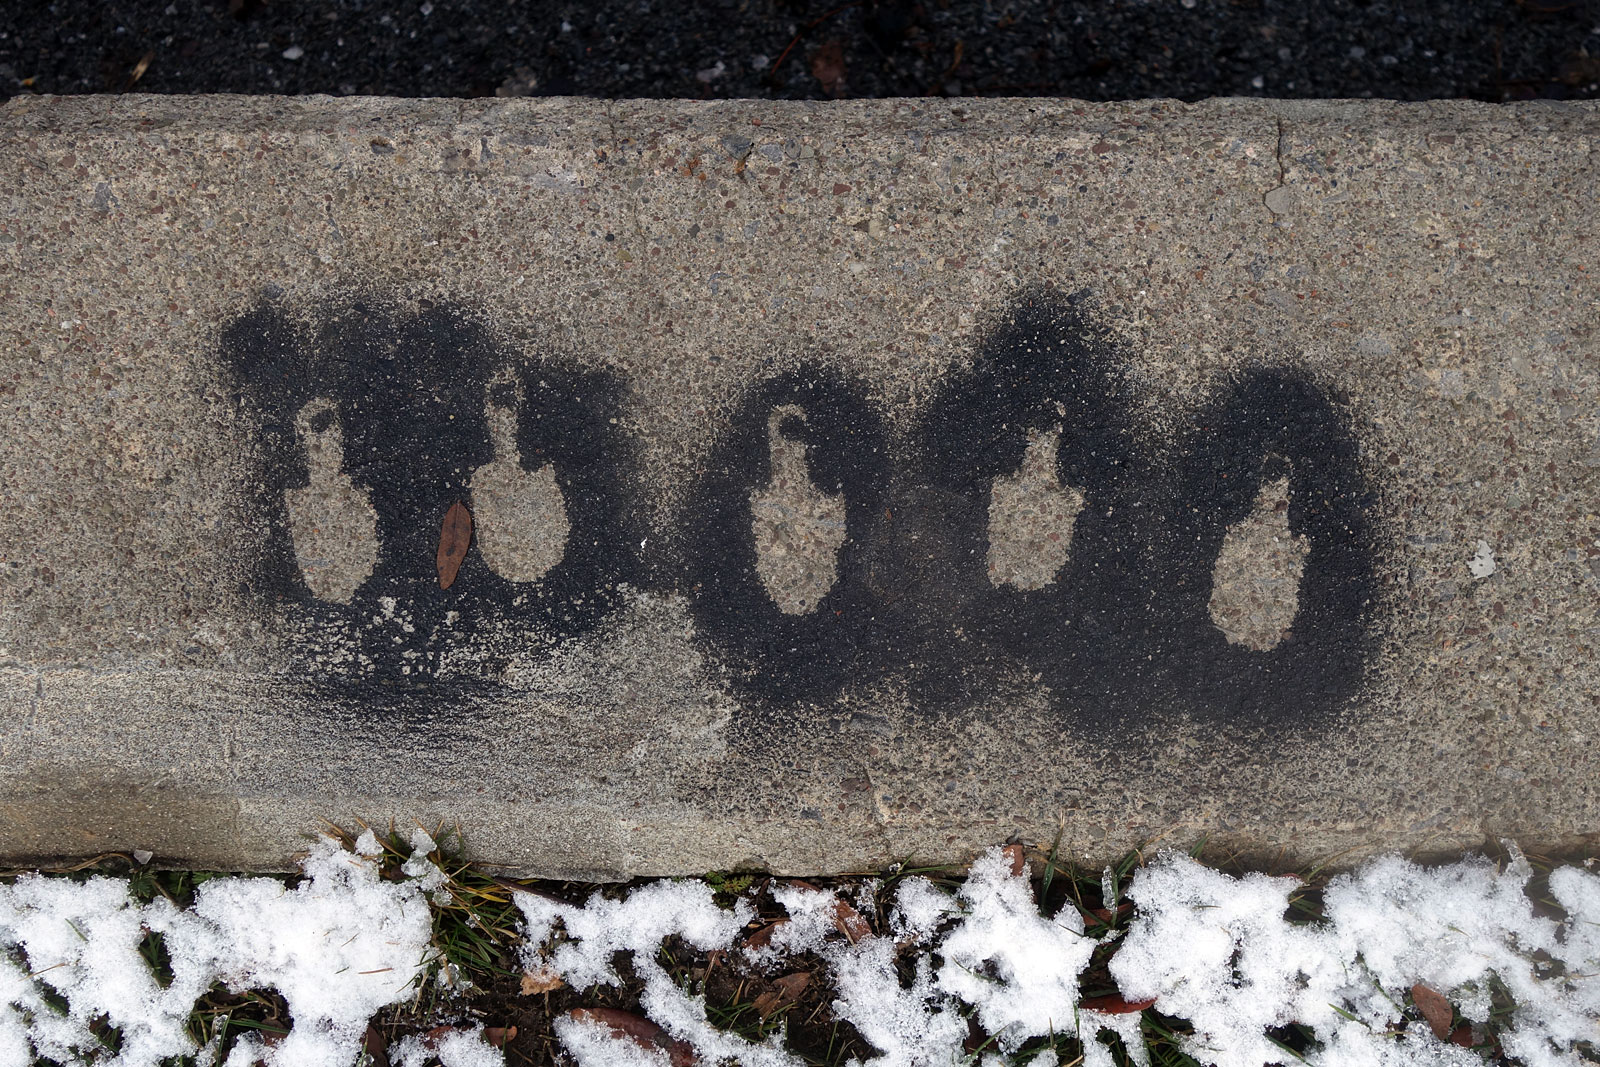 Spray paint art on sidewalk at Wegman's in Rochester, New York